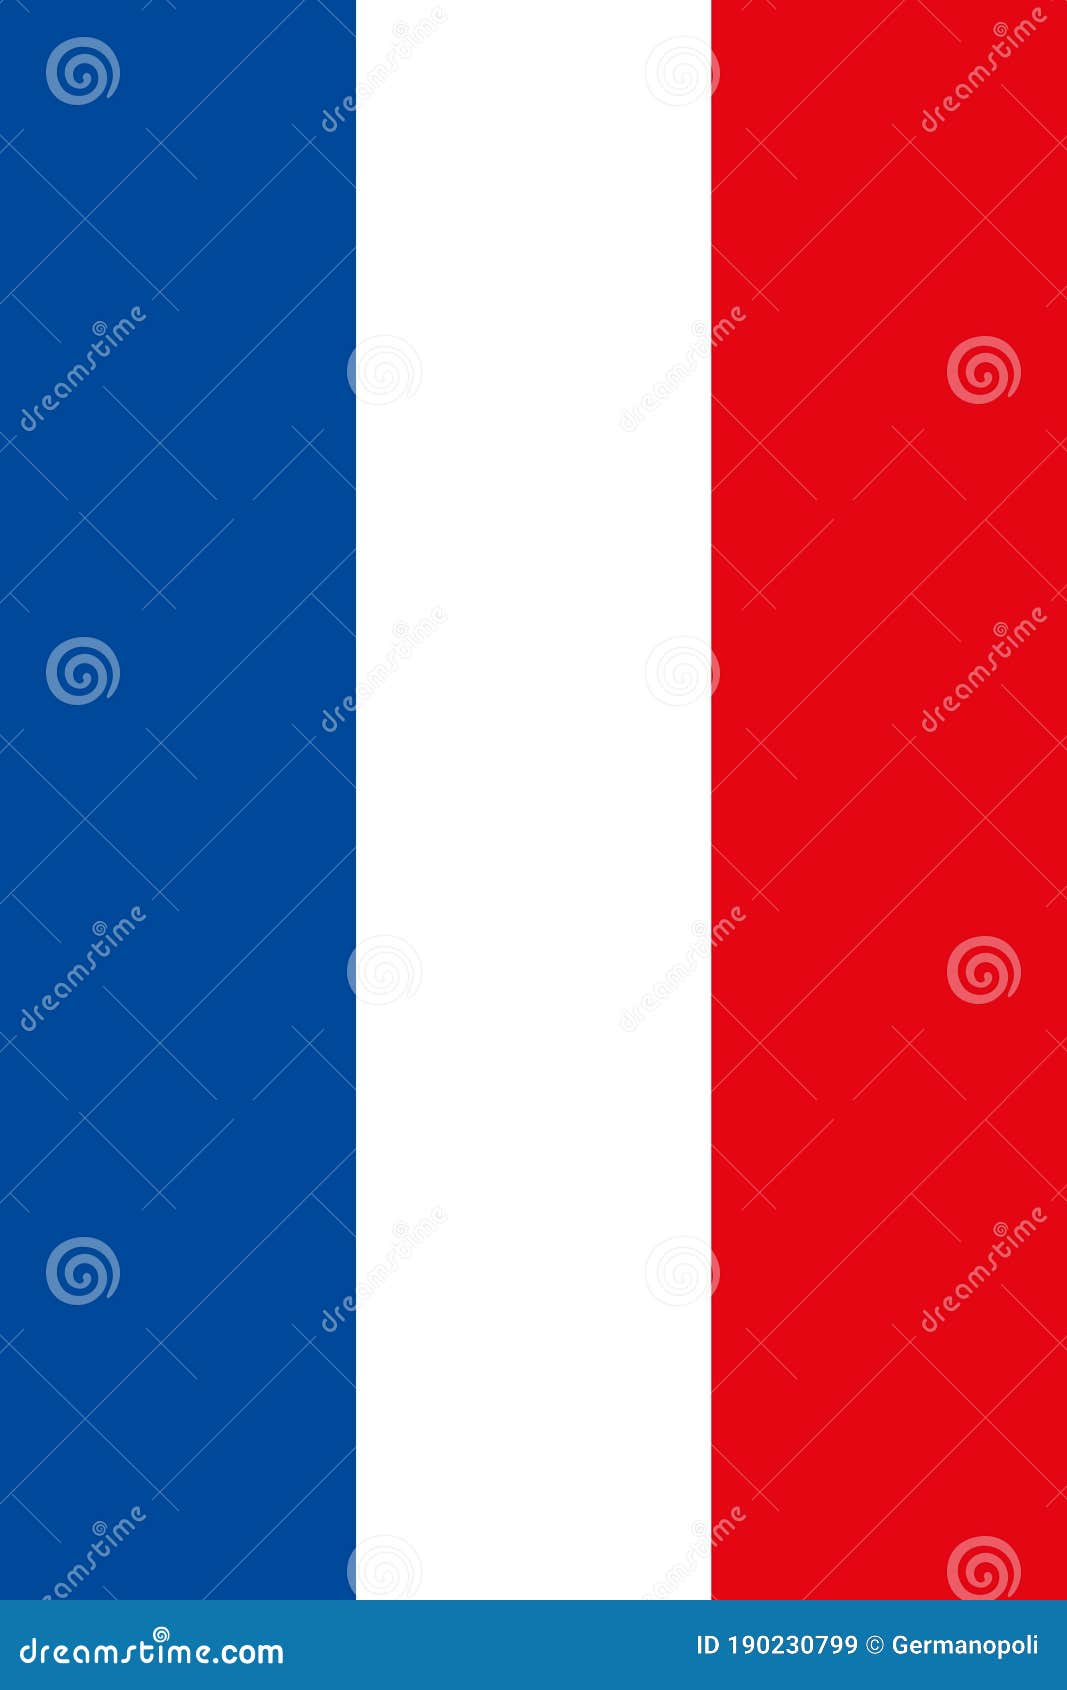 AZ FLAG Ghirlanda 6 Metri 20 Bandiere Francia 21x15cm Festone BANDIERINE Bandiera Francese 15 x 21 cm 